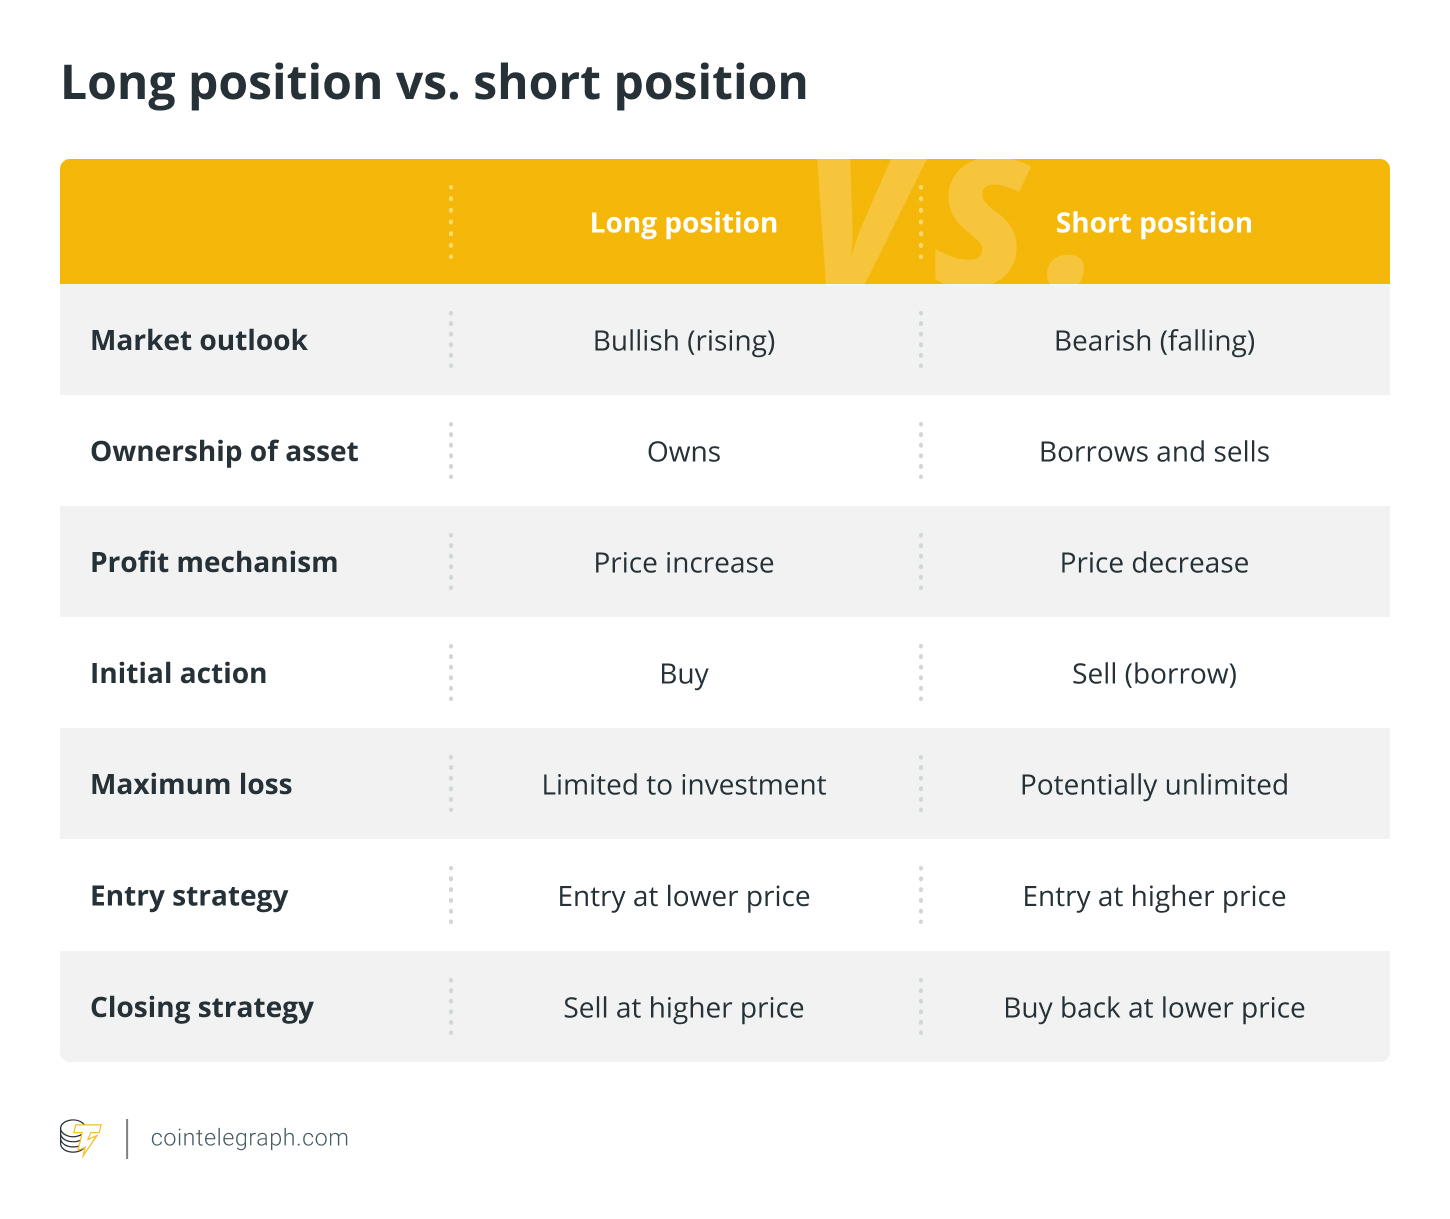 Long position vs. short position